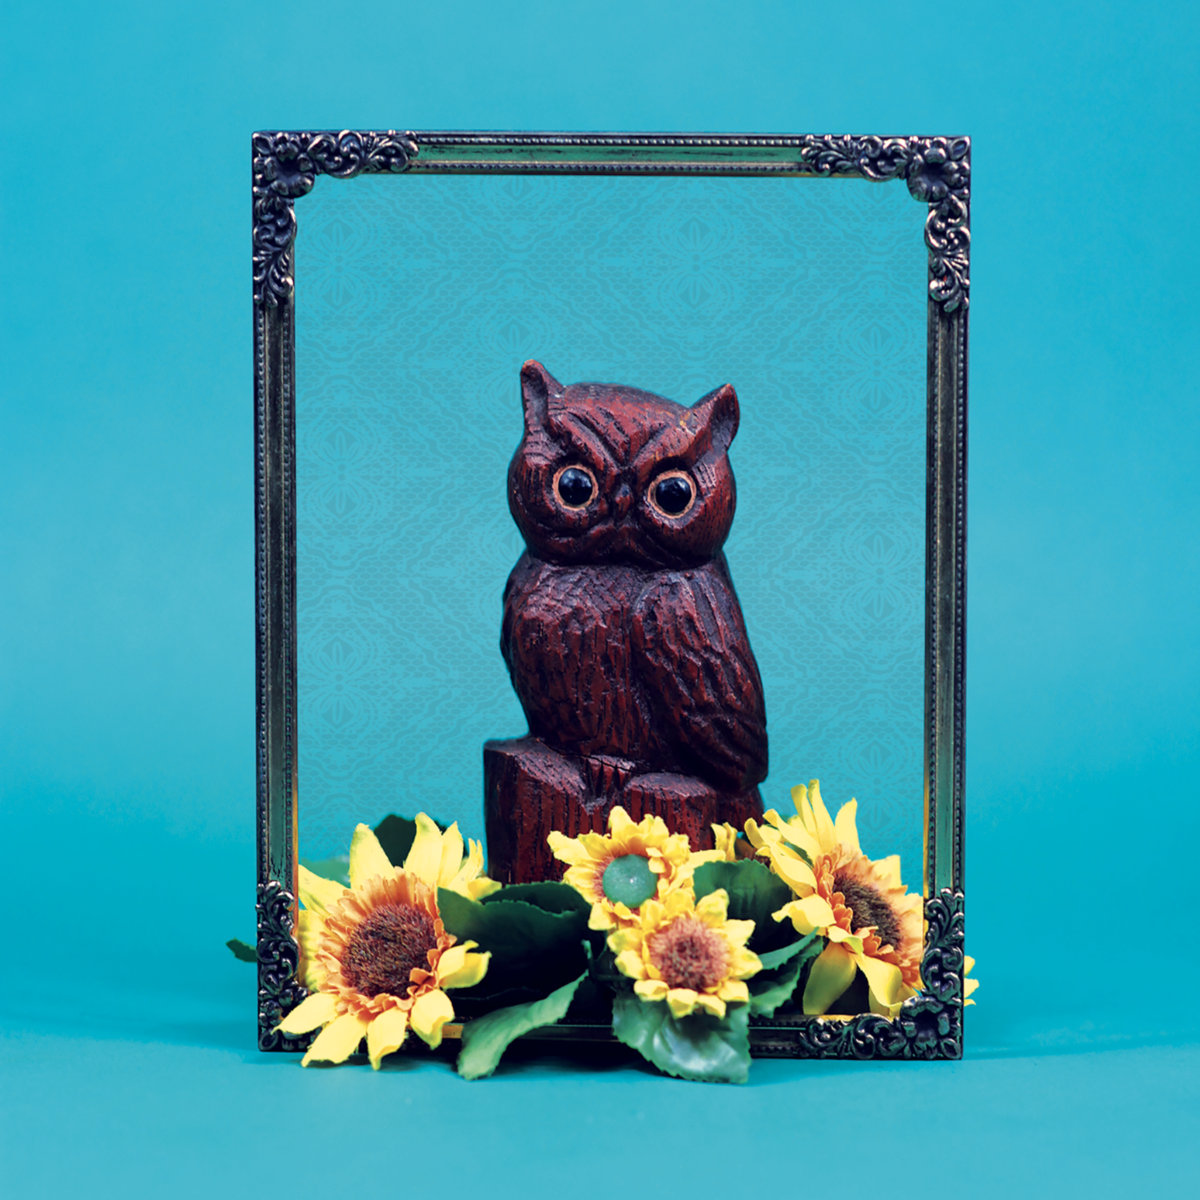 will henriksen nothing left behind album art owl statue